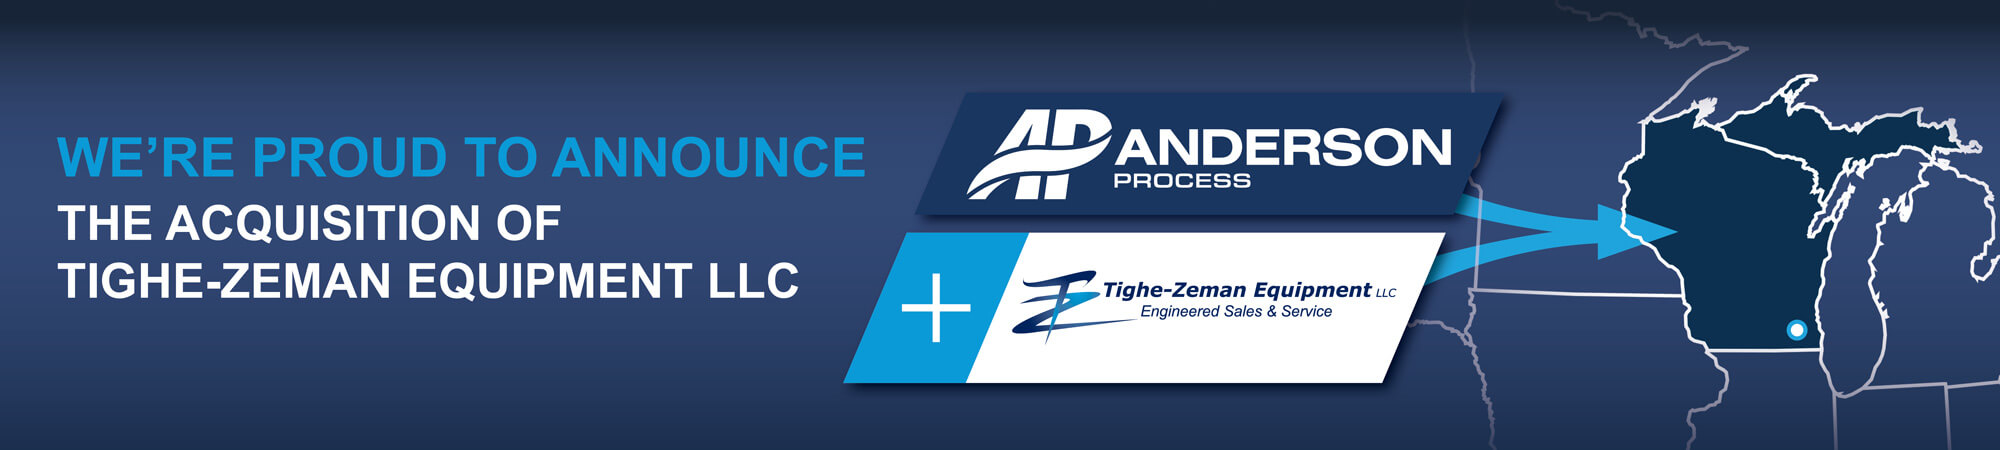 Anderson Process Acquires Tighe-Zeman Equipment LLC